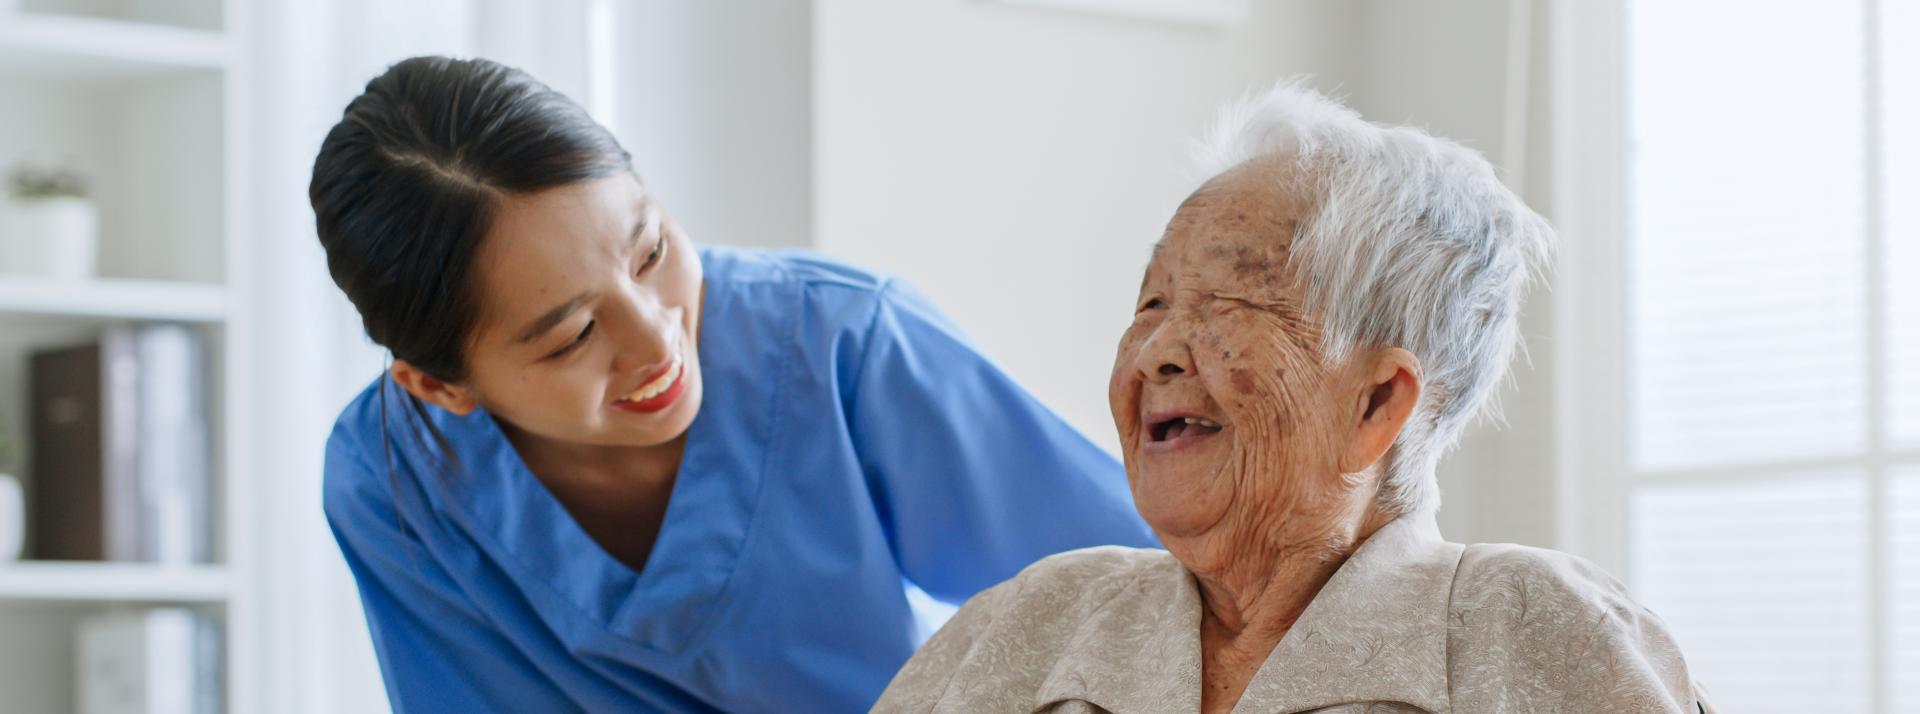 Nurse accompanying a senior person